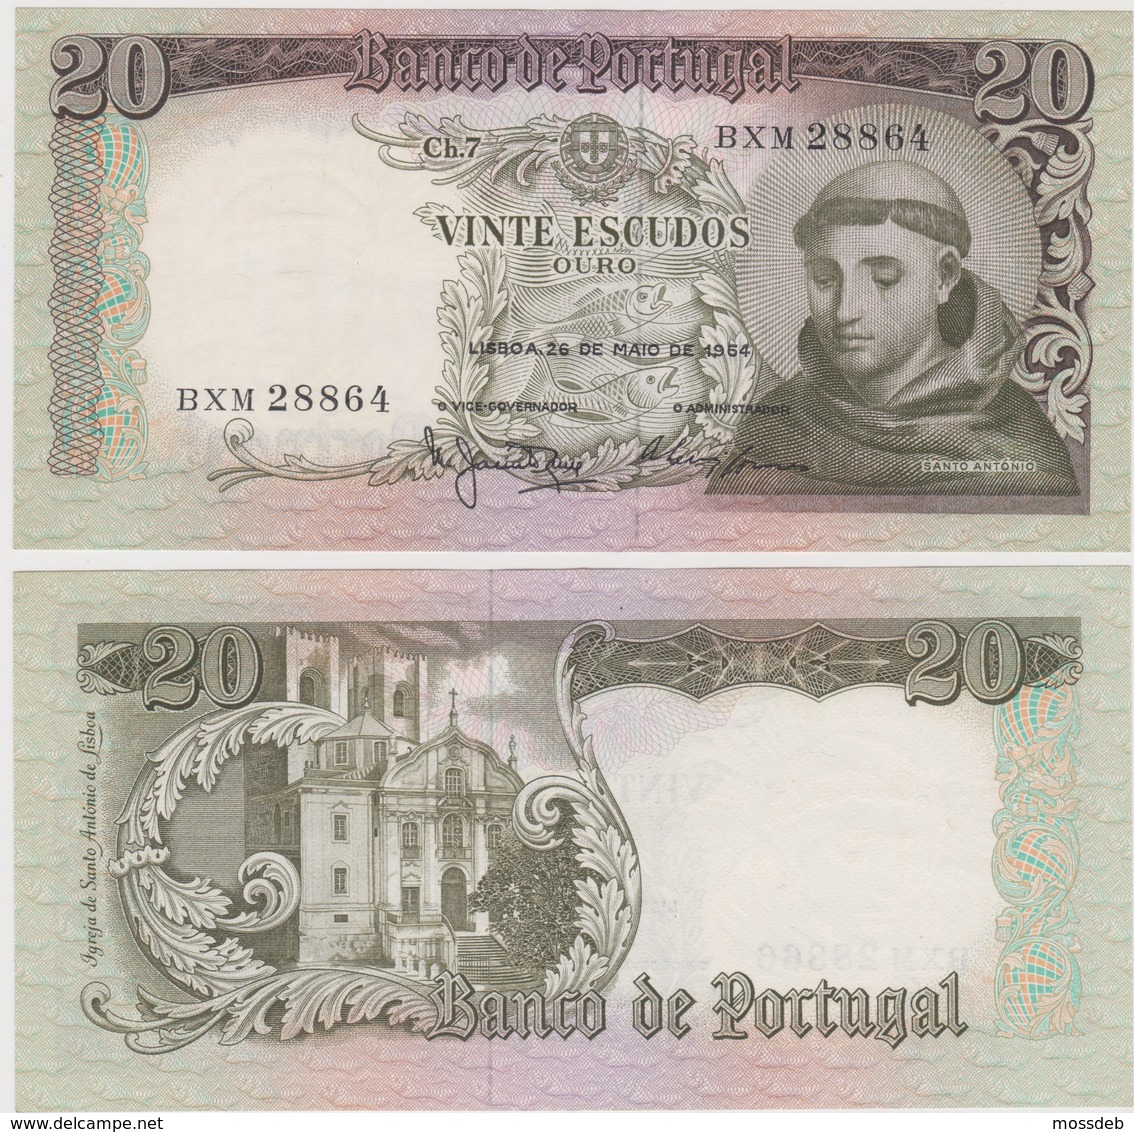 PORTUGAL 20 ESCUDOS - 20$00 ESCUDOS - SANTO ANTÓNIO  - Ch. 7 - 26-05-1964 - Portugal